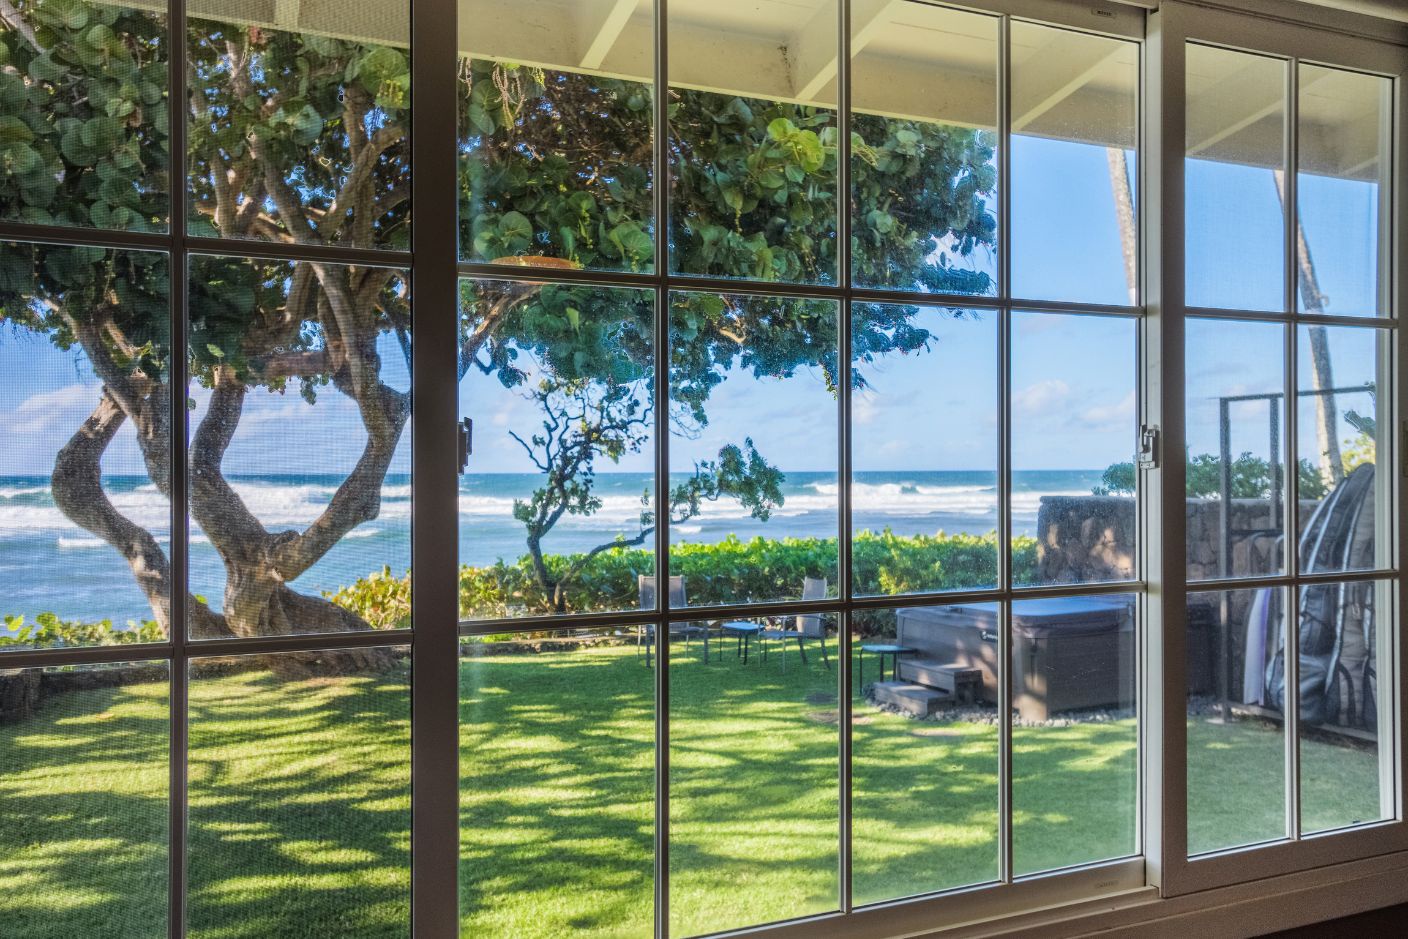 Haleiwa Vacation Rentals, Sunset Point Hawaiian Beachfront** - Wake up to the mesmerizing ocean views.